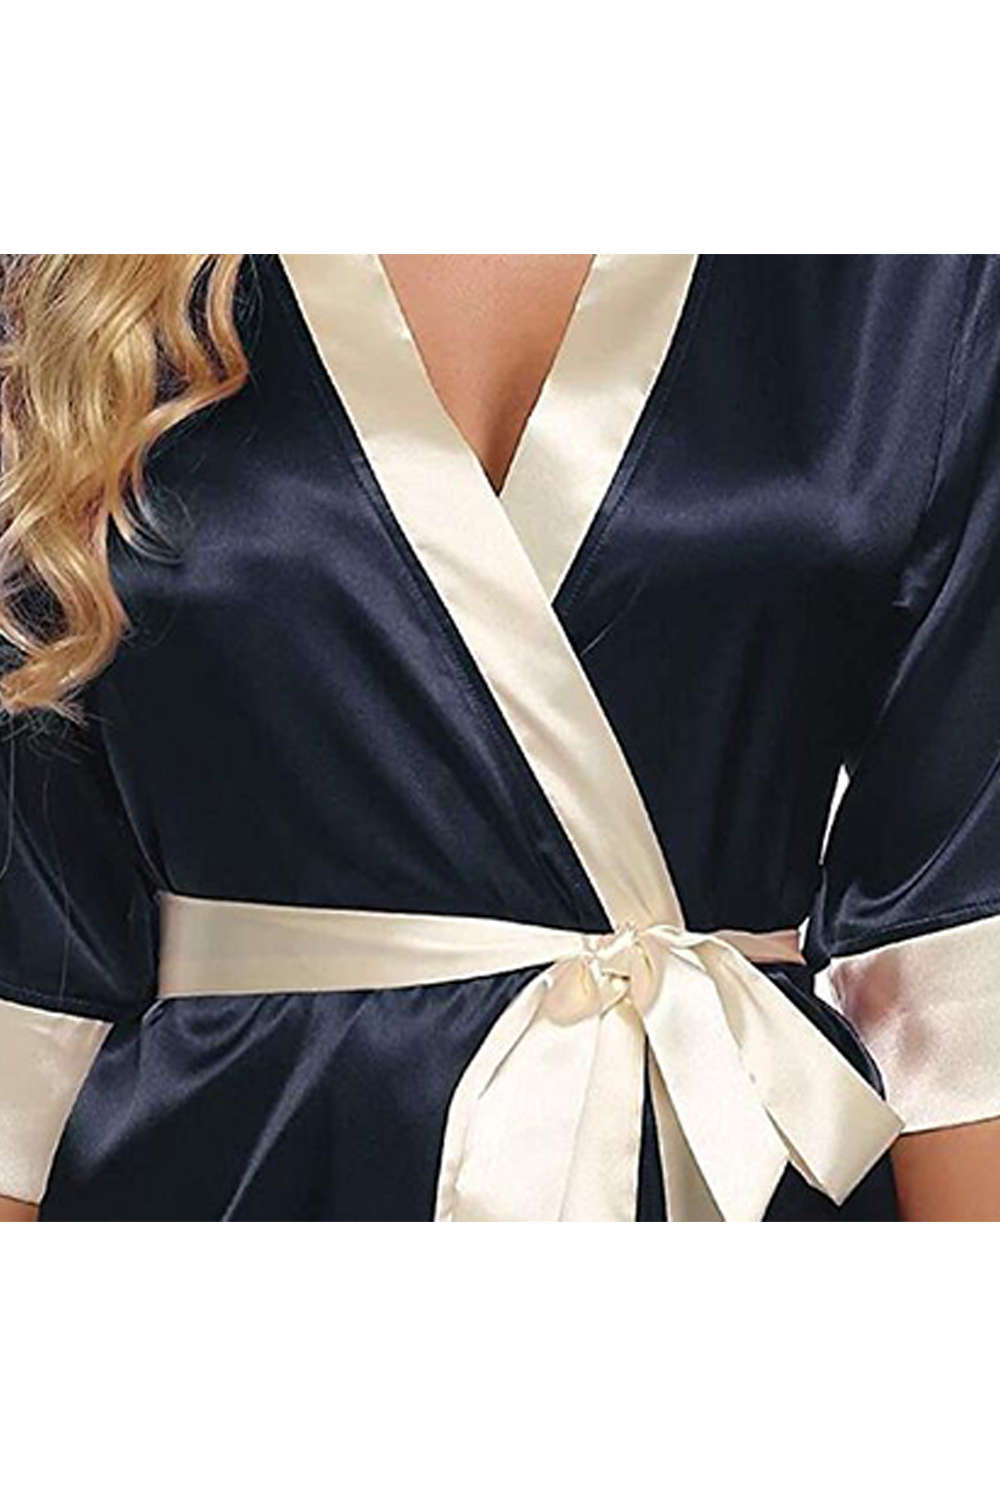 Iyasson Half Sleeves Lace Kimono Robe 